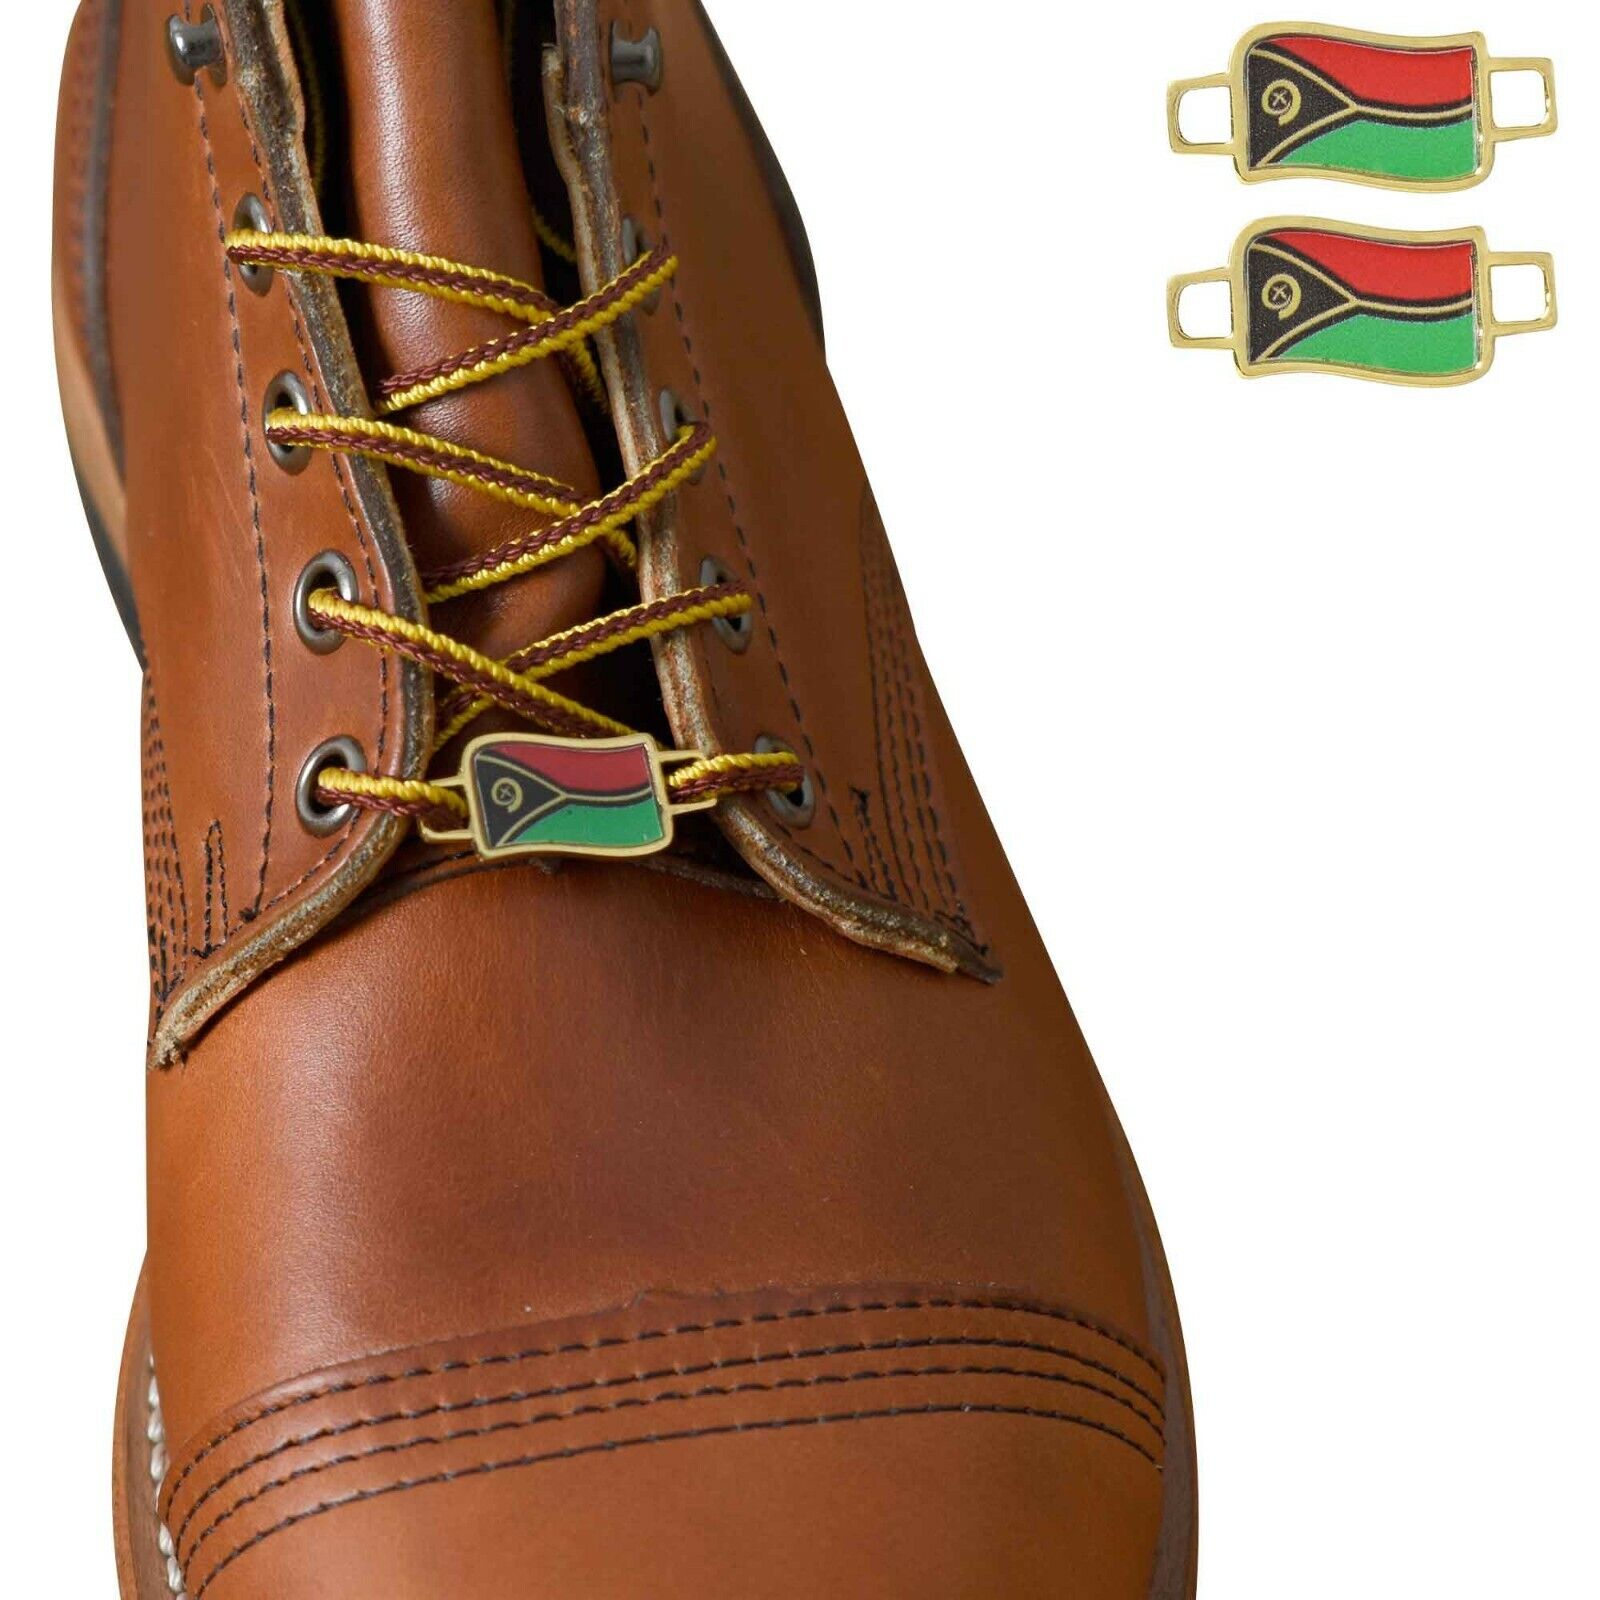 Vanuatu Flags Shoes Boot Shoelace Keeper Holder Charm BrooklynMaker